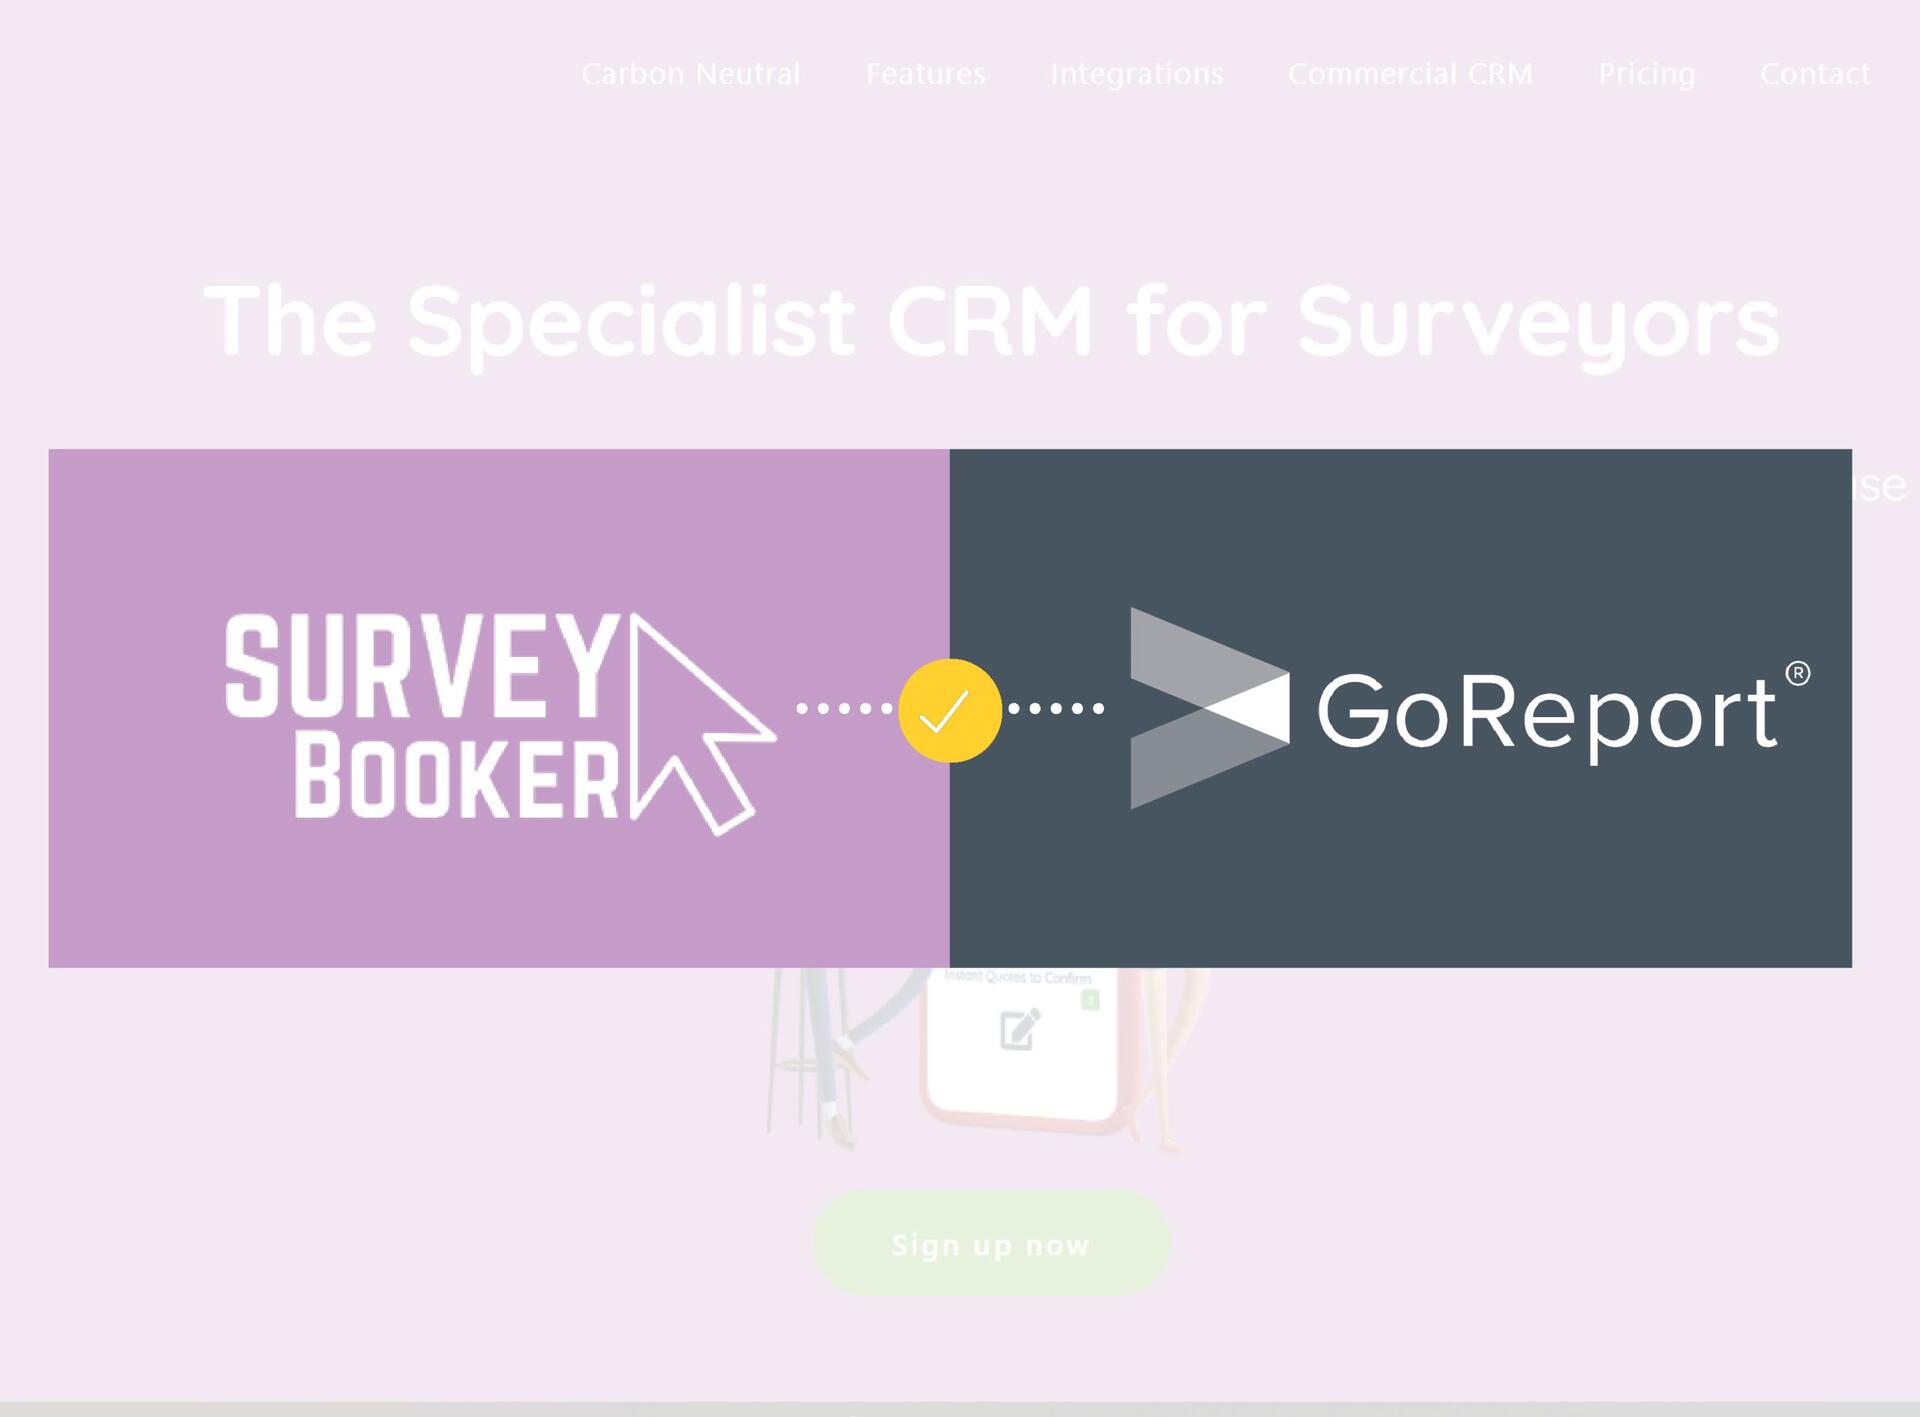 Leading digital surveying solution GoReport announce integration with leading surveying CRM platform Survey Booker.